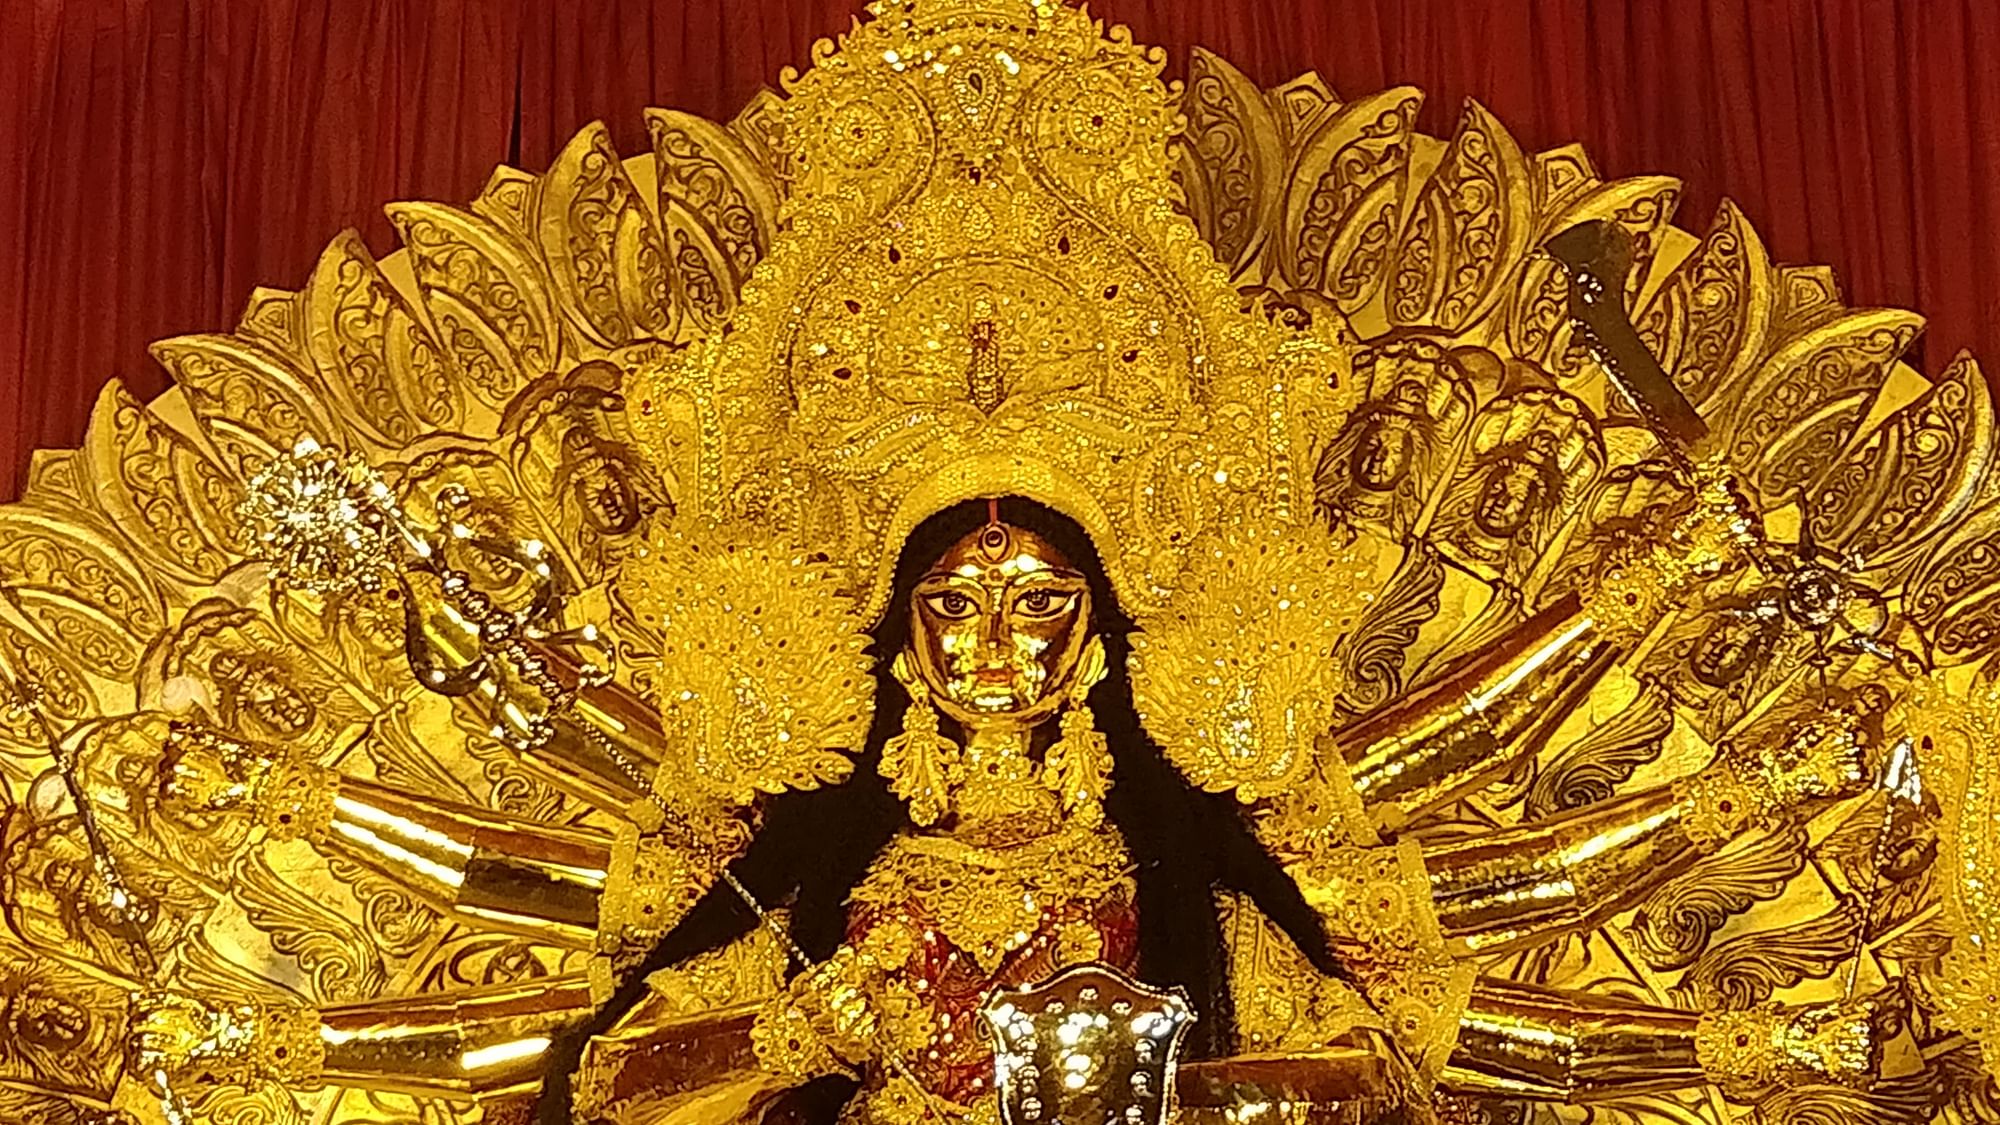 The Durga idol at Kolkata’s Santosh Mitra Square Puja pandal is made of 50 kg of gold!